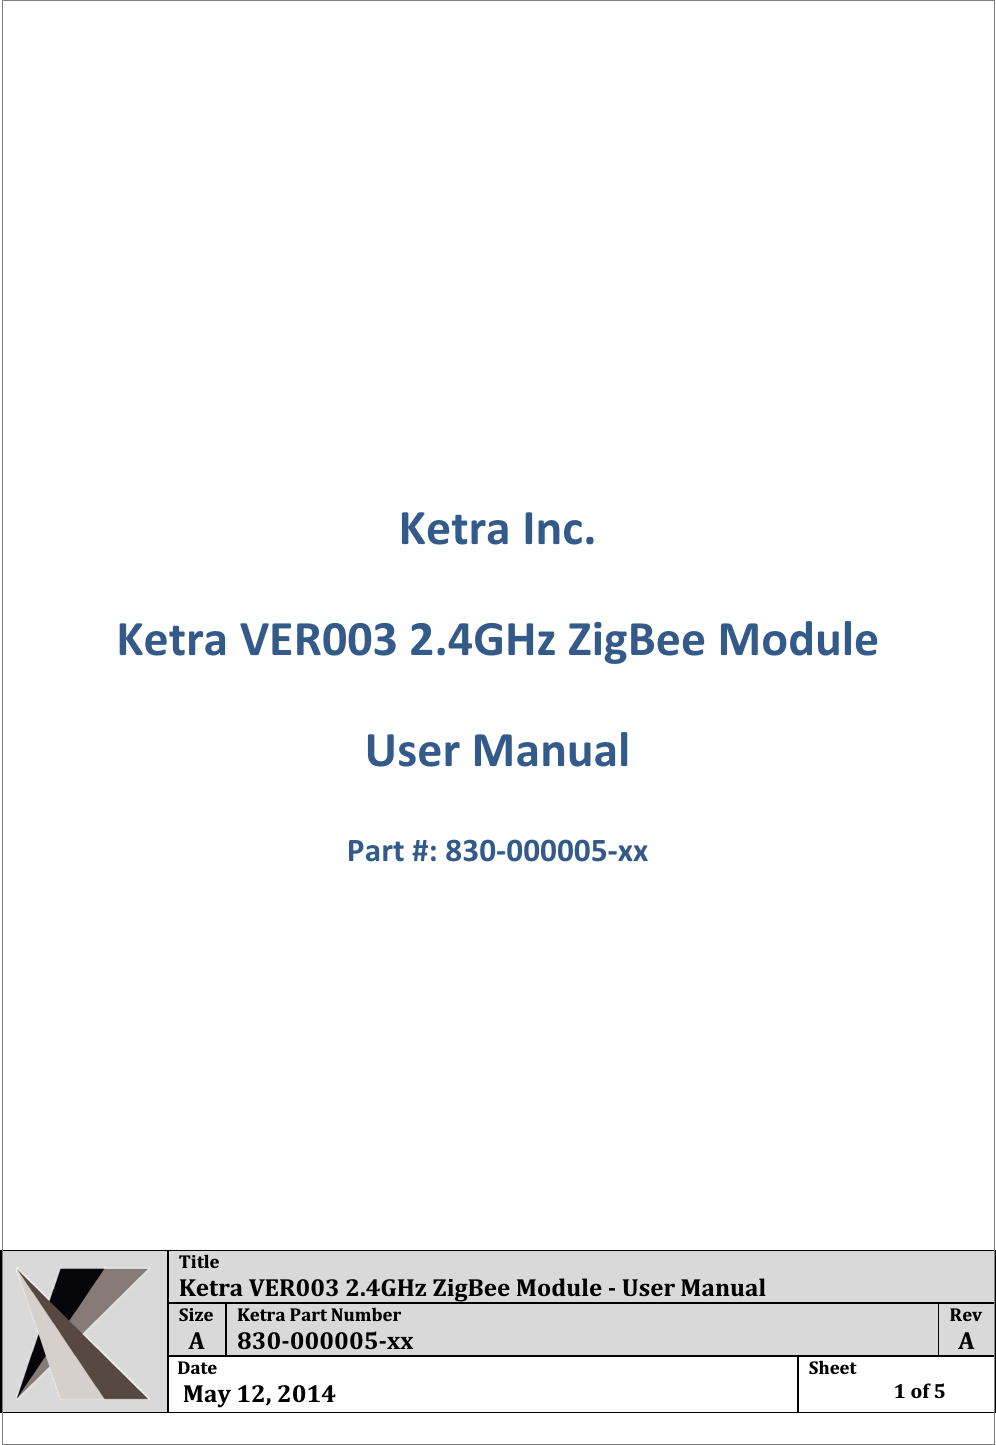  Title Ketra VER003 2.4GHz ZigBee Module - User Manual Size  A Ketra Part Number 830-000005-xx Rev  A Date   May 12, 2014 Sheet    1 of 5      Ketra Inc. Ketra VER003 2.4GHz ZigBee Module  User Manual Part #: 830-000005-xx   